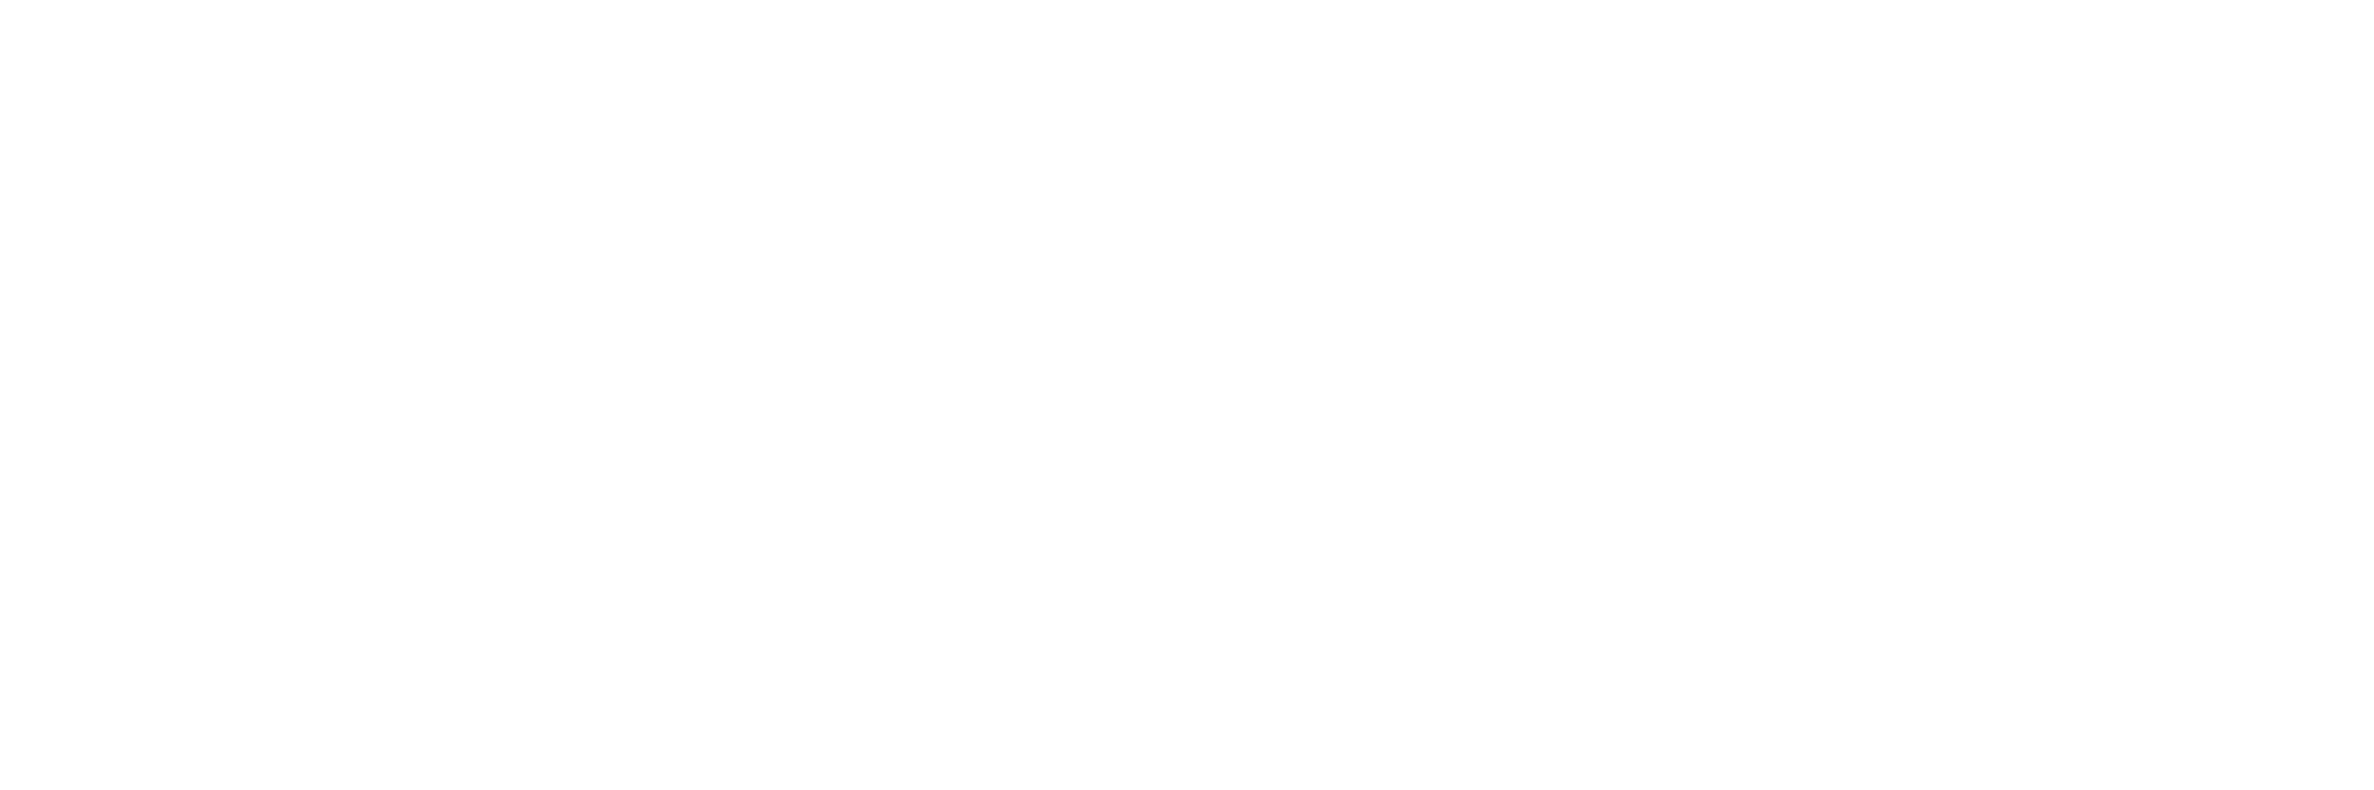 White Rose Libraries